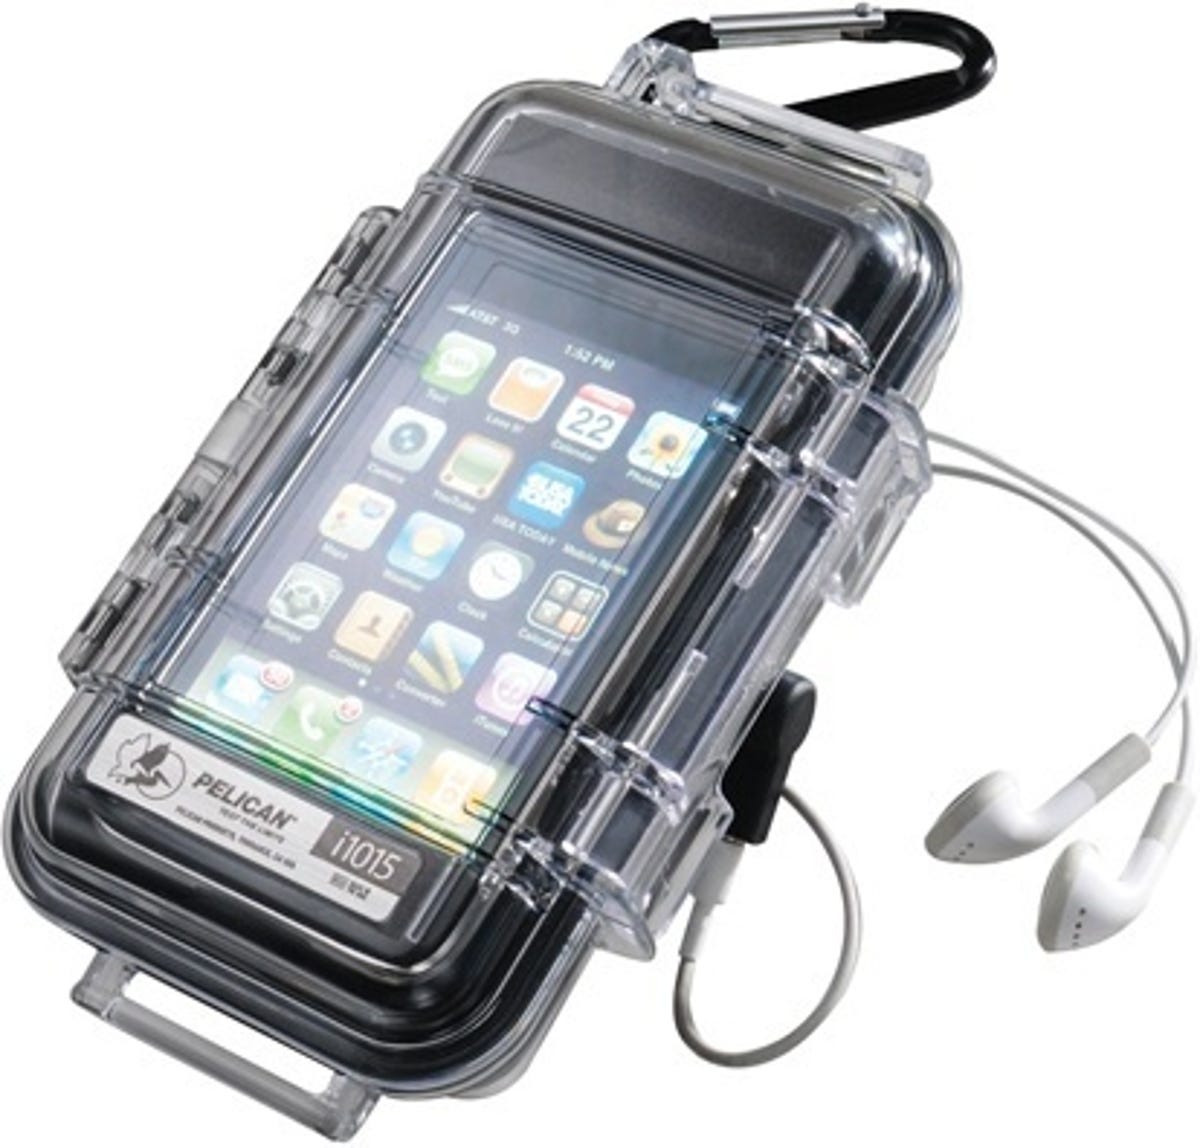 iphone-cases-pelican-i1015-case-for-iphones.jpg